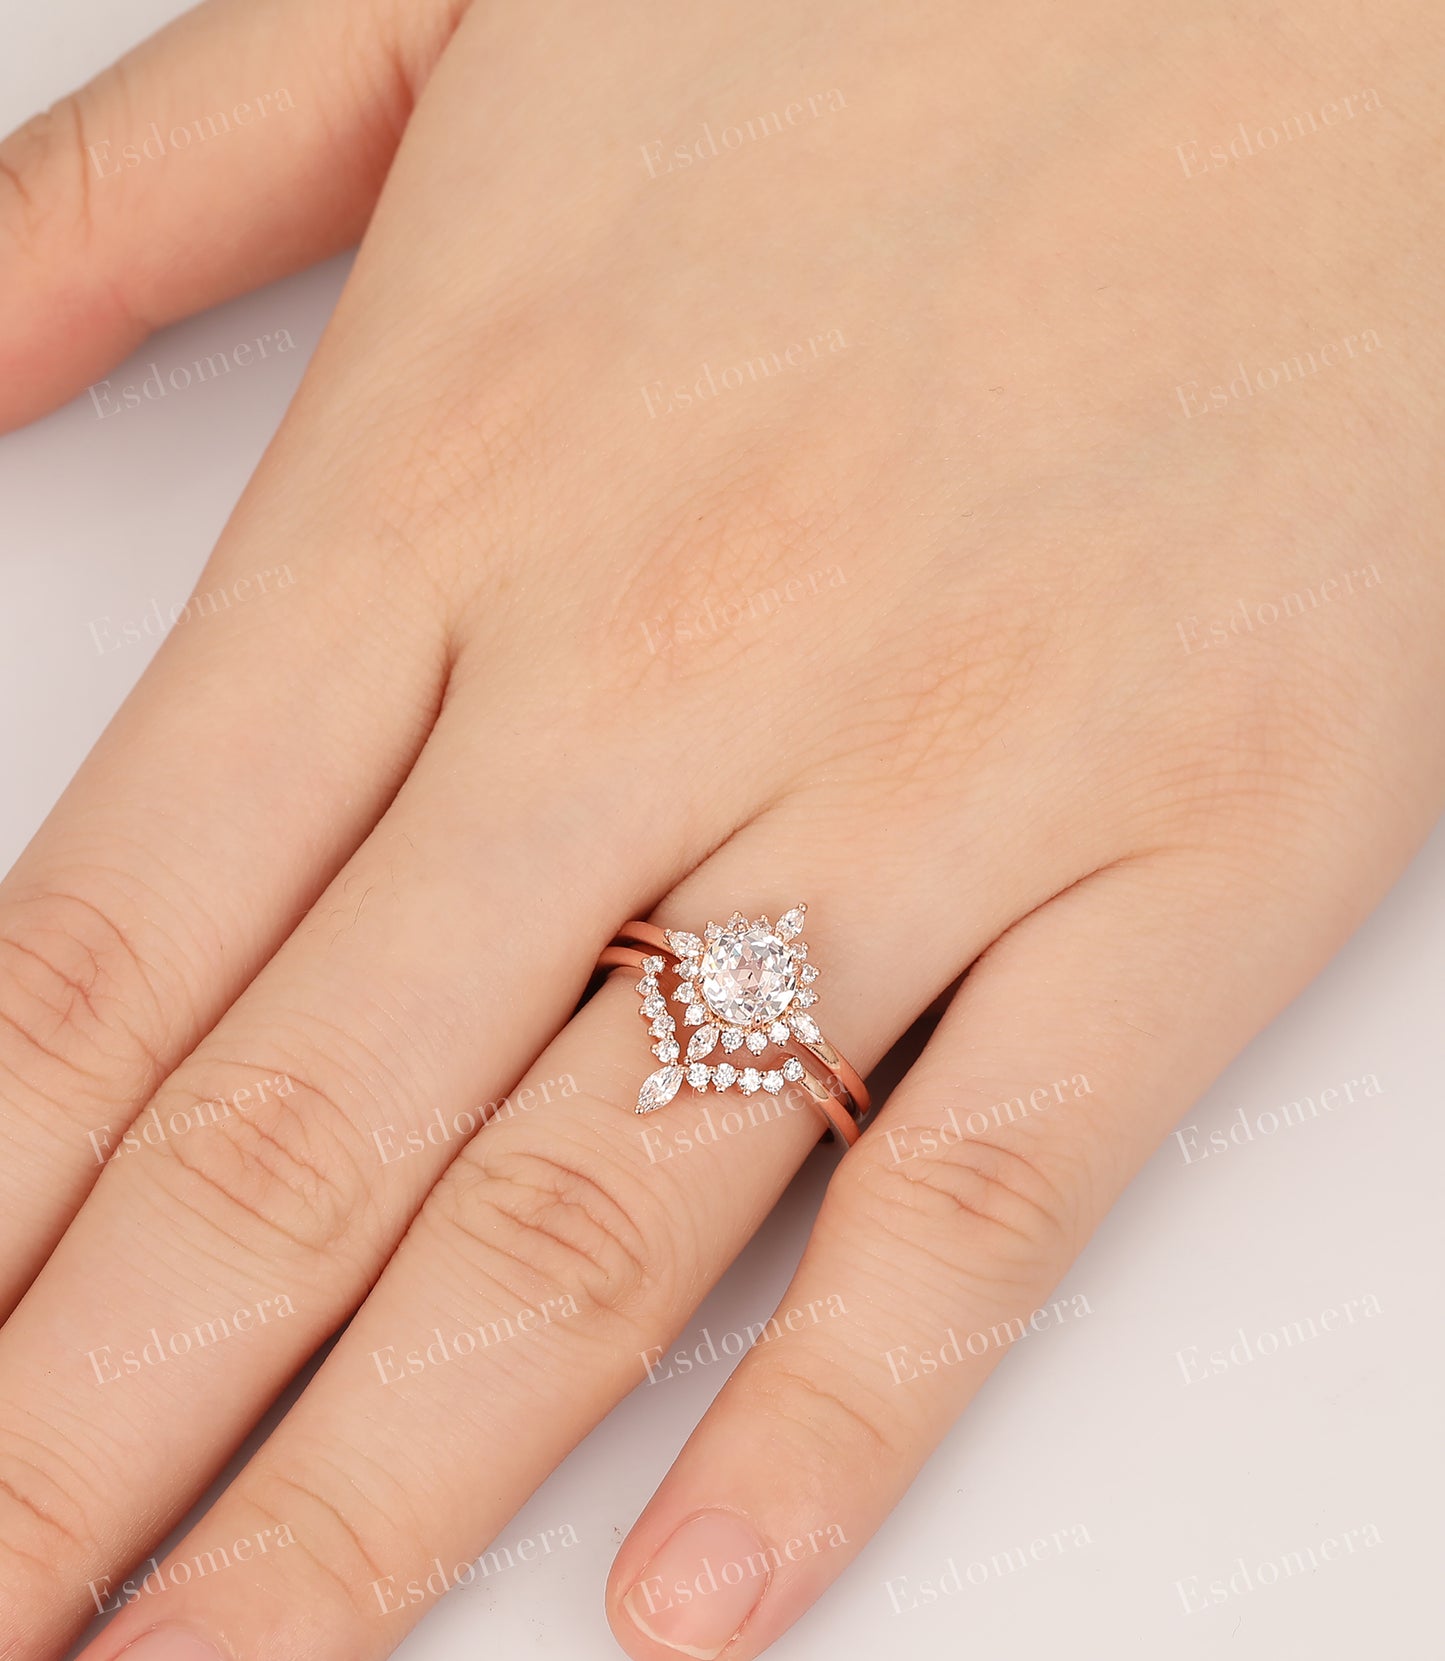 Halo Moissanite Promise Engagement Ring, Unique Rose Gold Round Cut 6mm Moissanite Ring, Vintage Bridal Wedding Sets